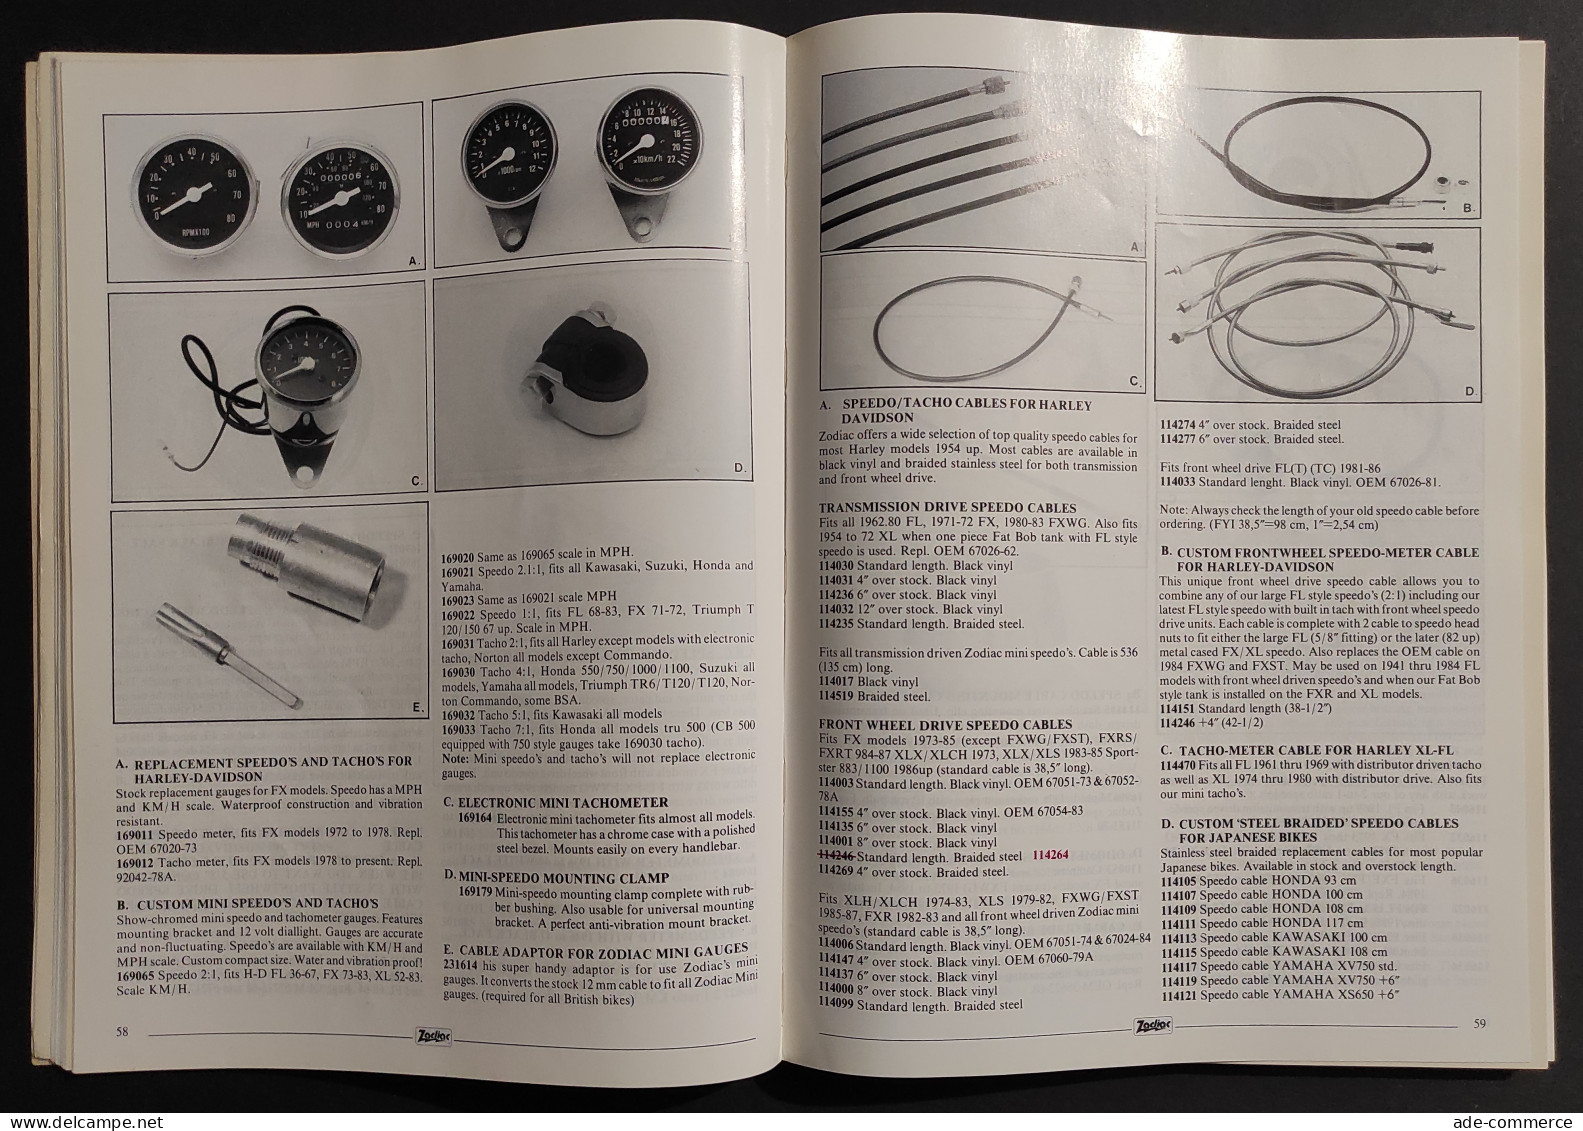 Zodiac - Motorcycle Products European Edition - 1990 - Catalogo - Engines